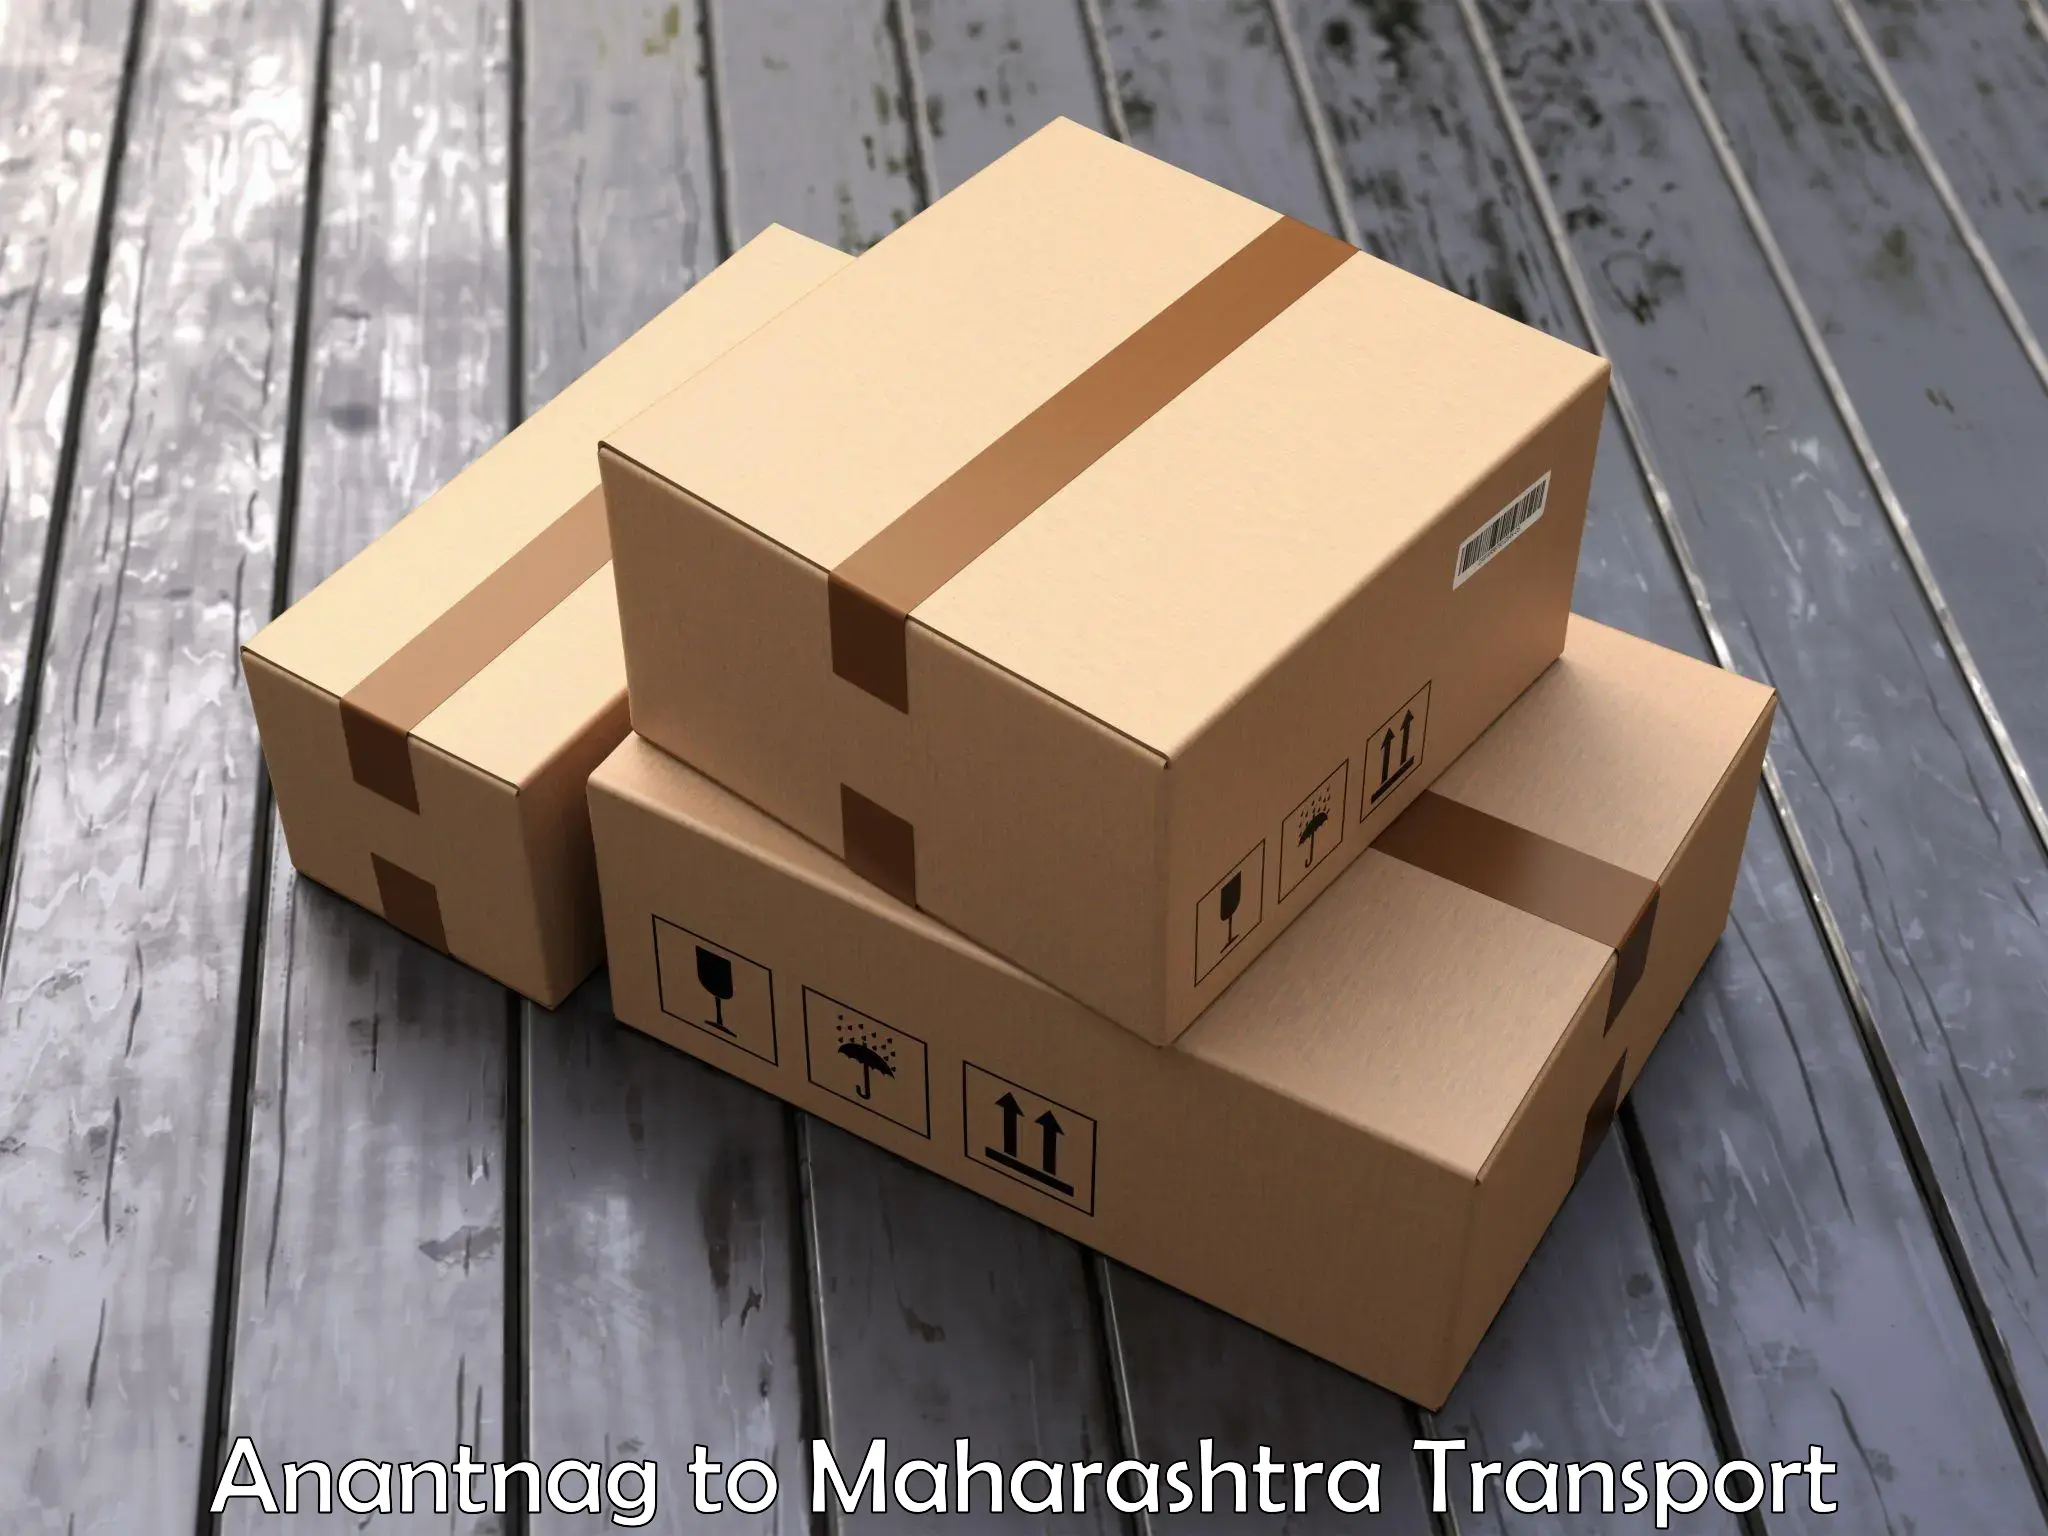 Truck transport companies in India Anantnag to Dahanu